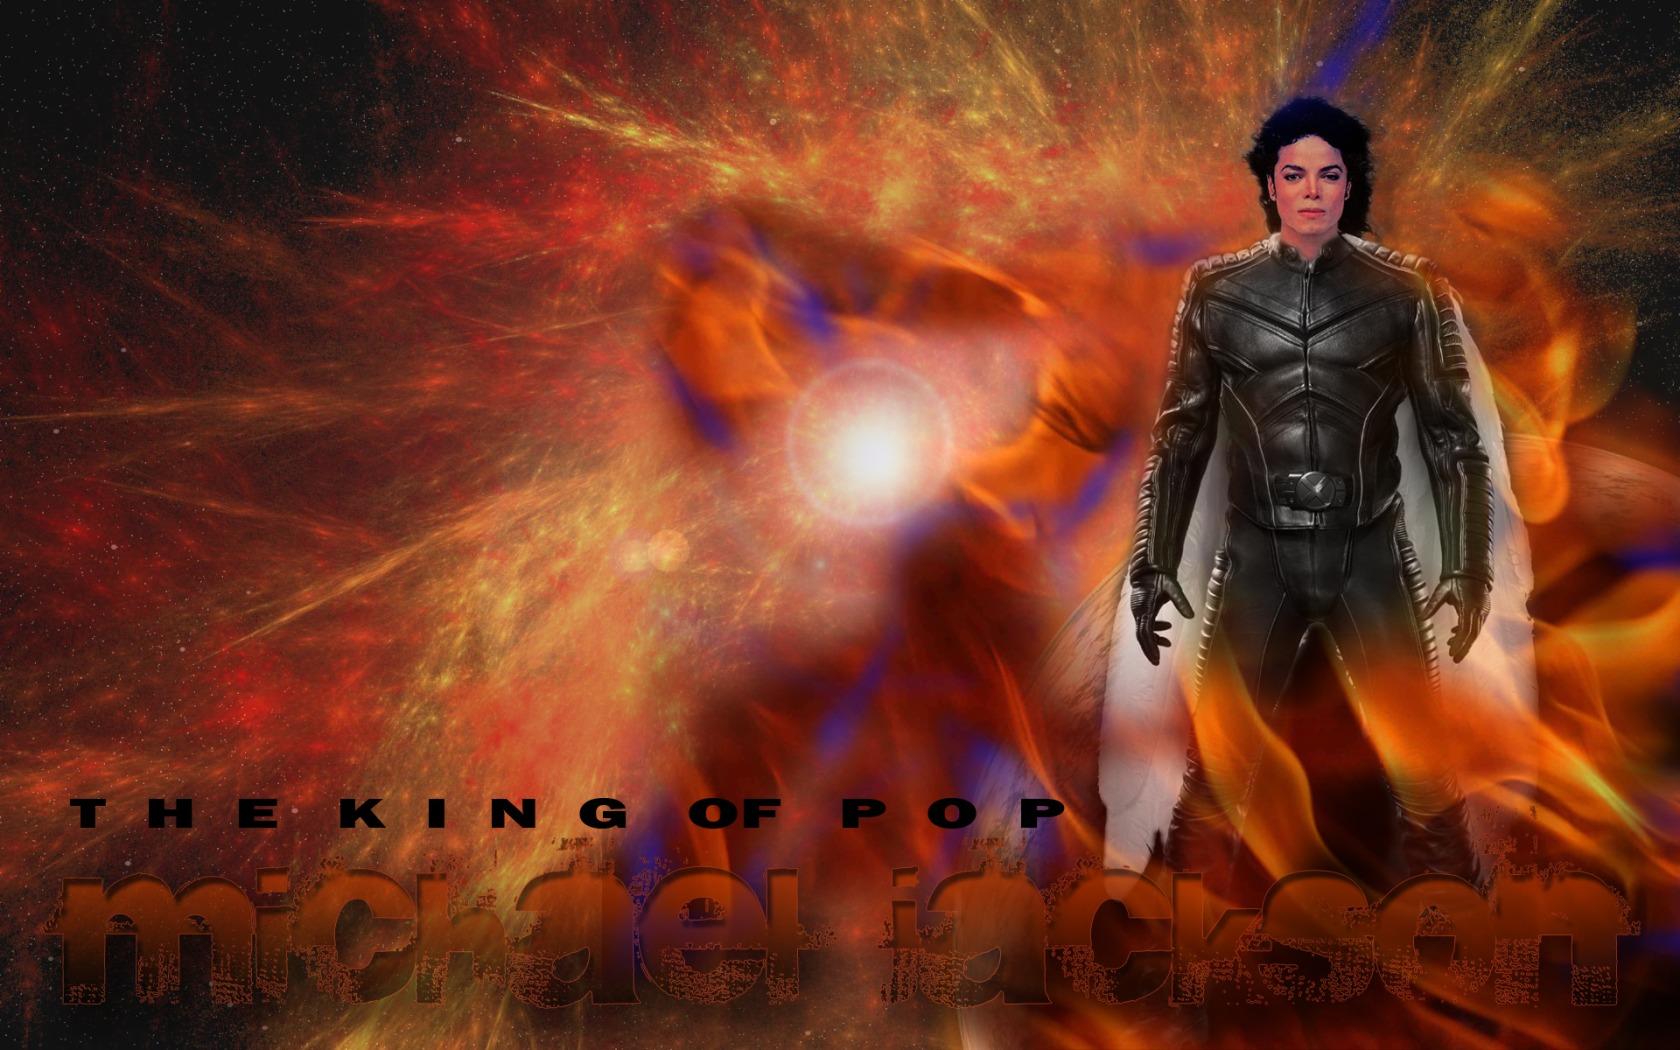 Michael Jackson The King of Pop widescreen wallpaper. Wide